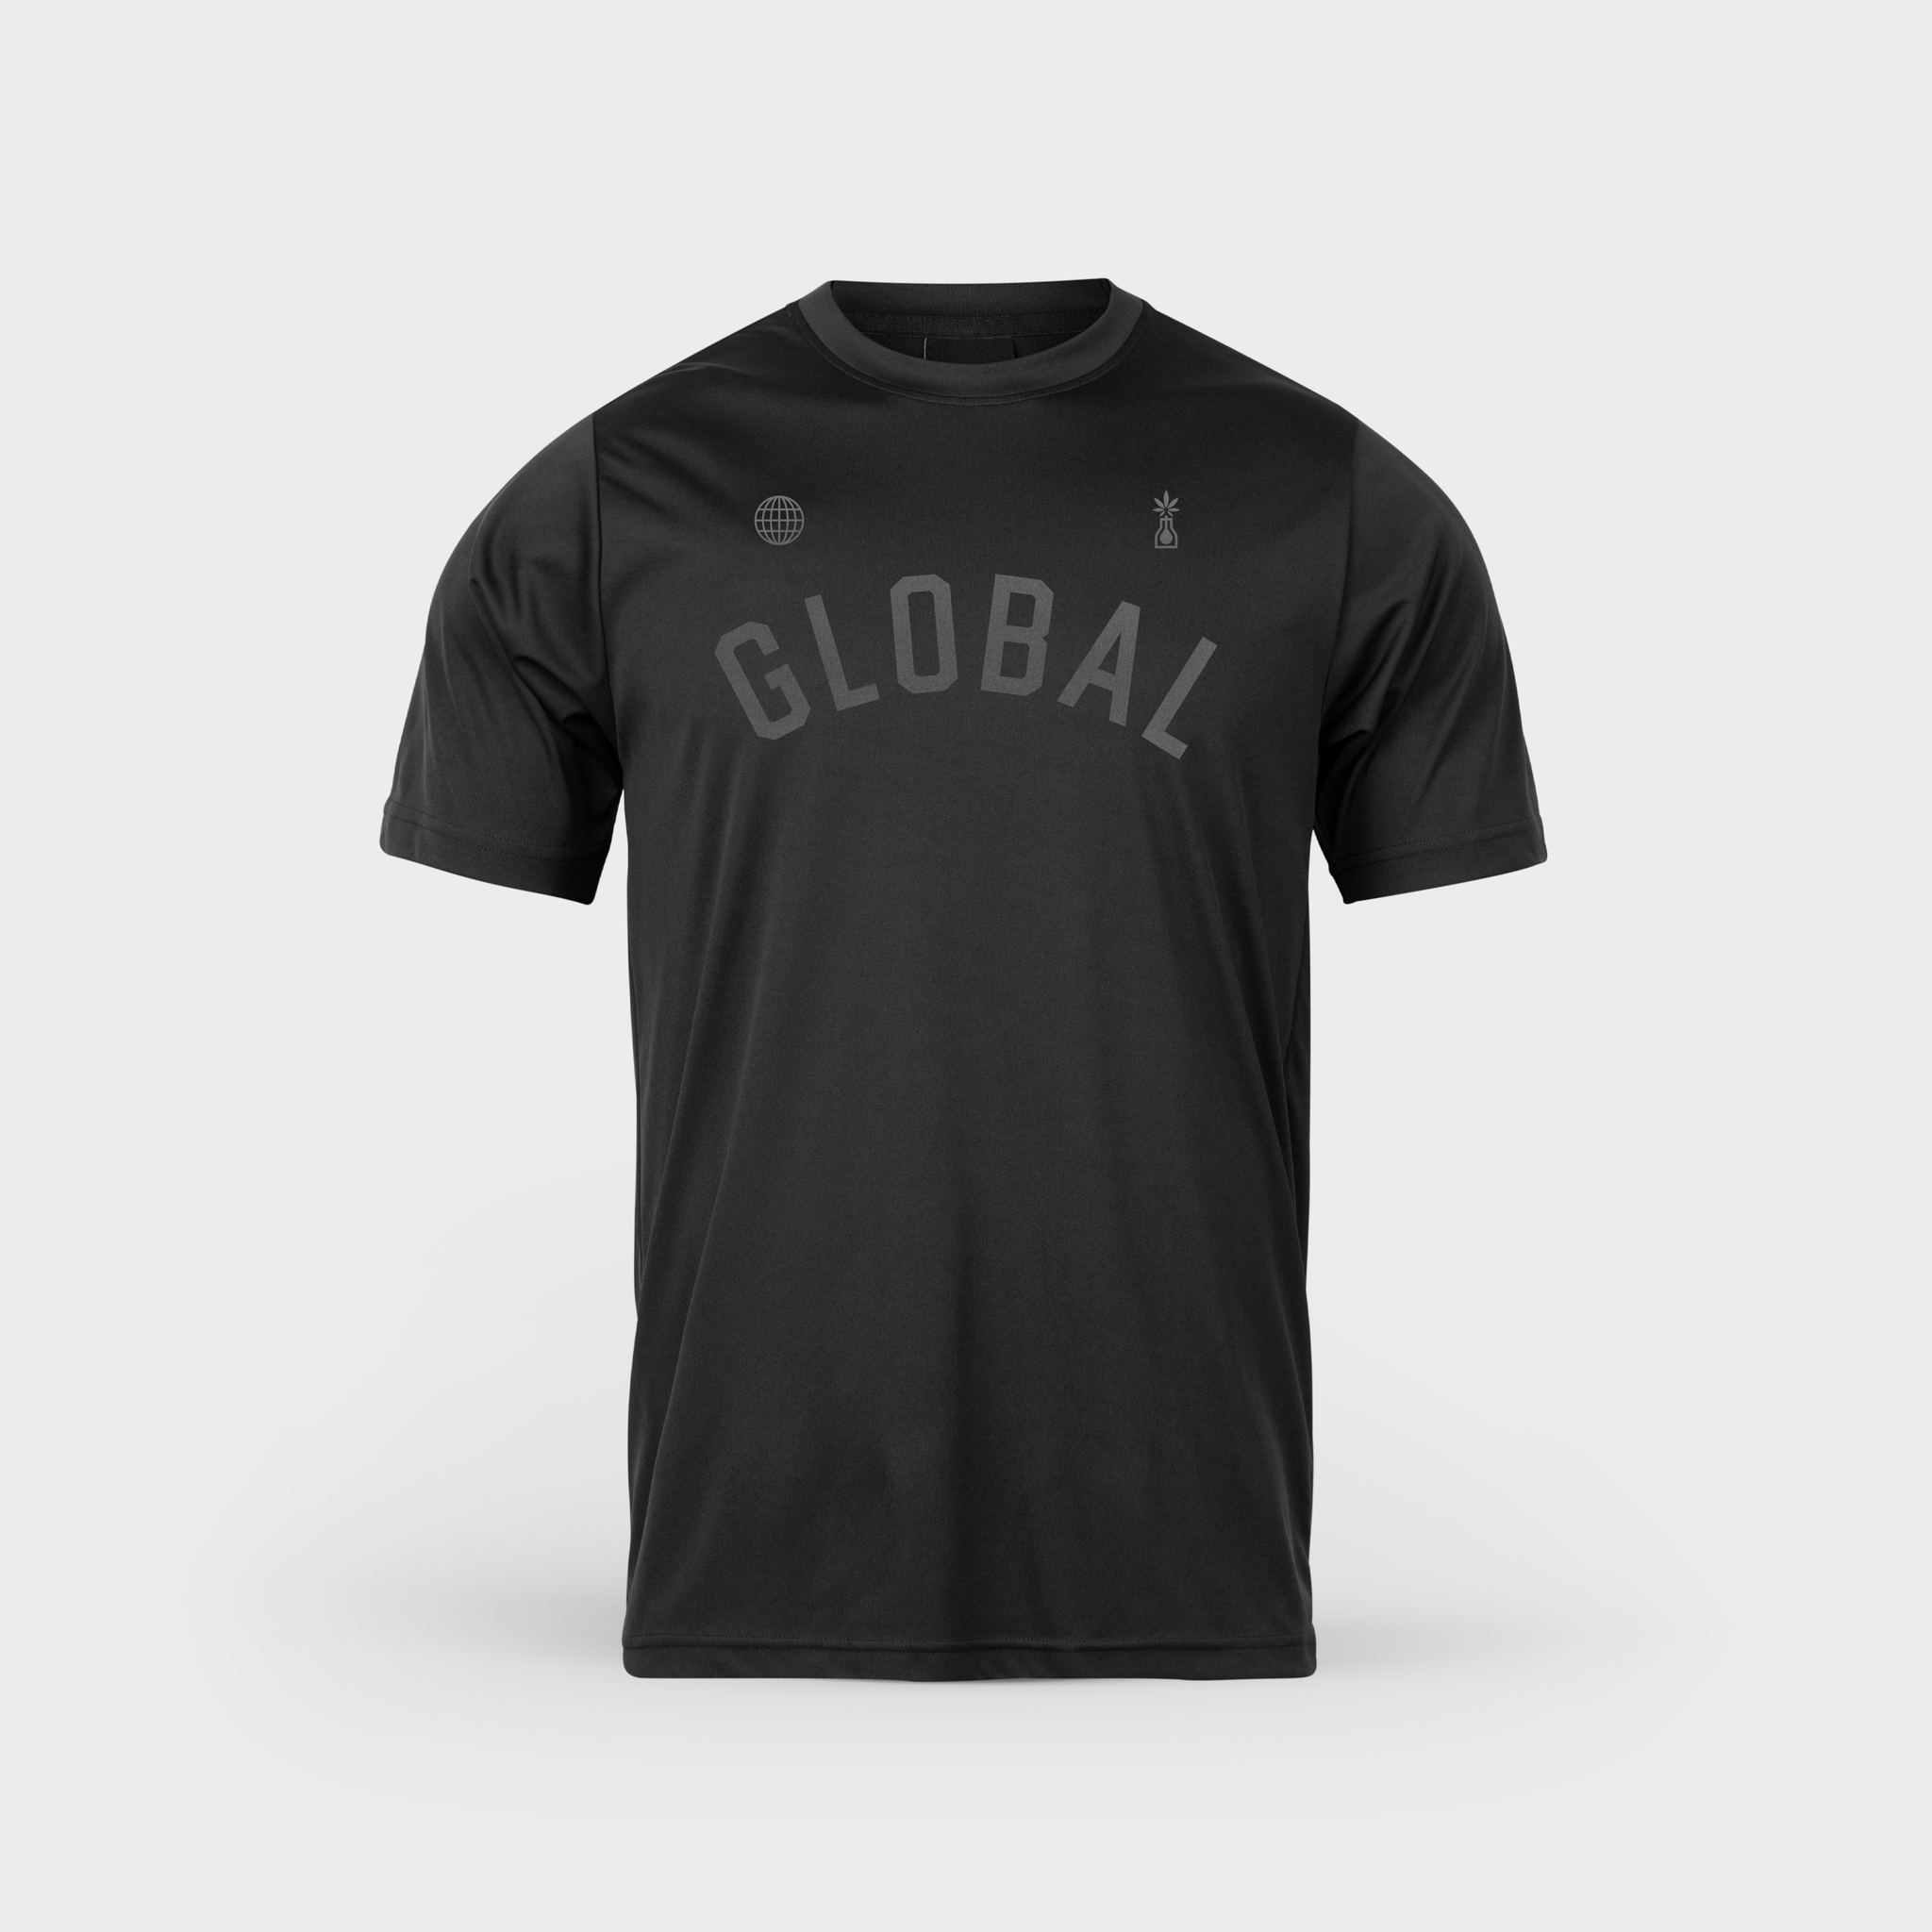 Global Team Shirt